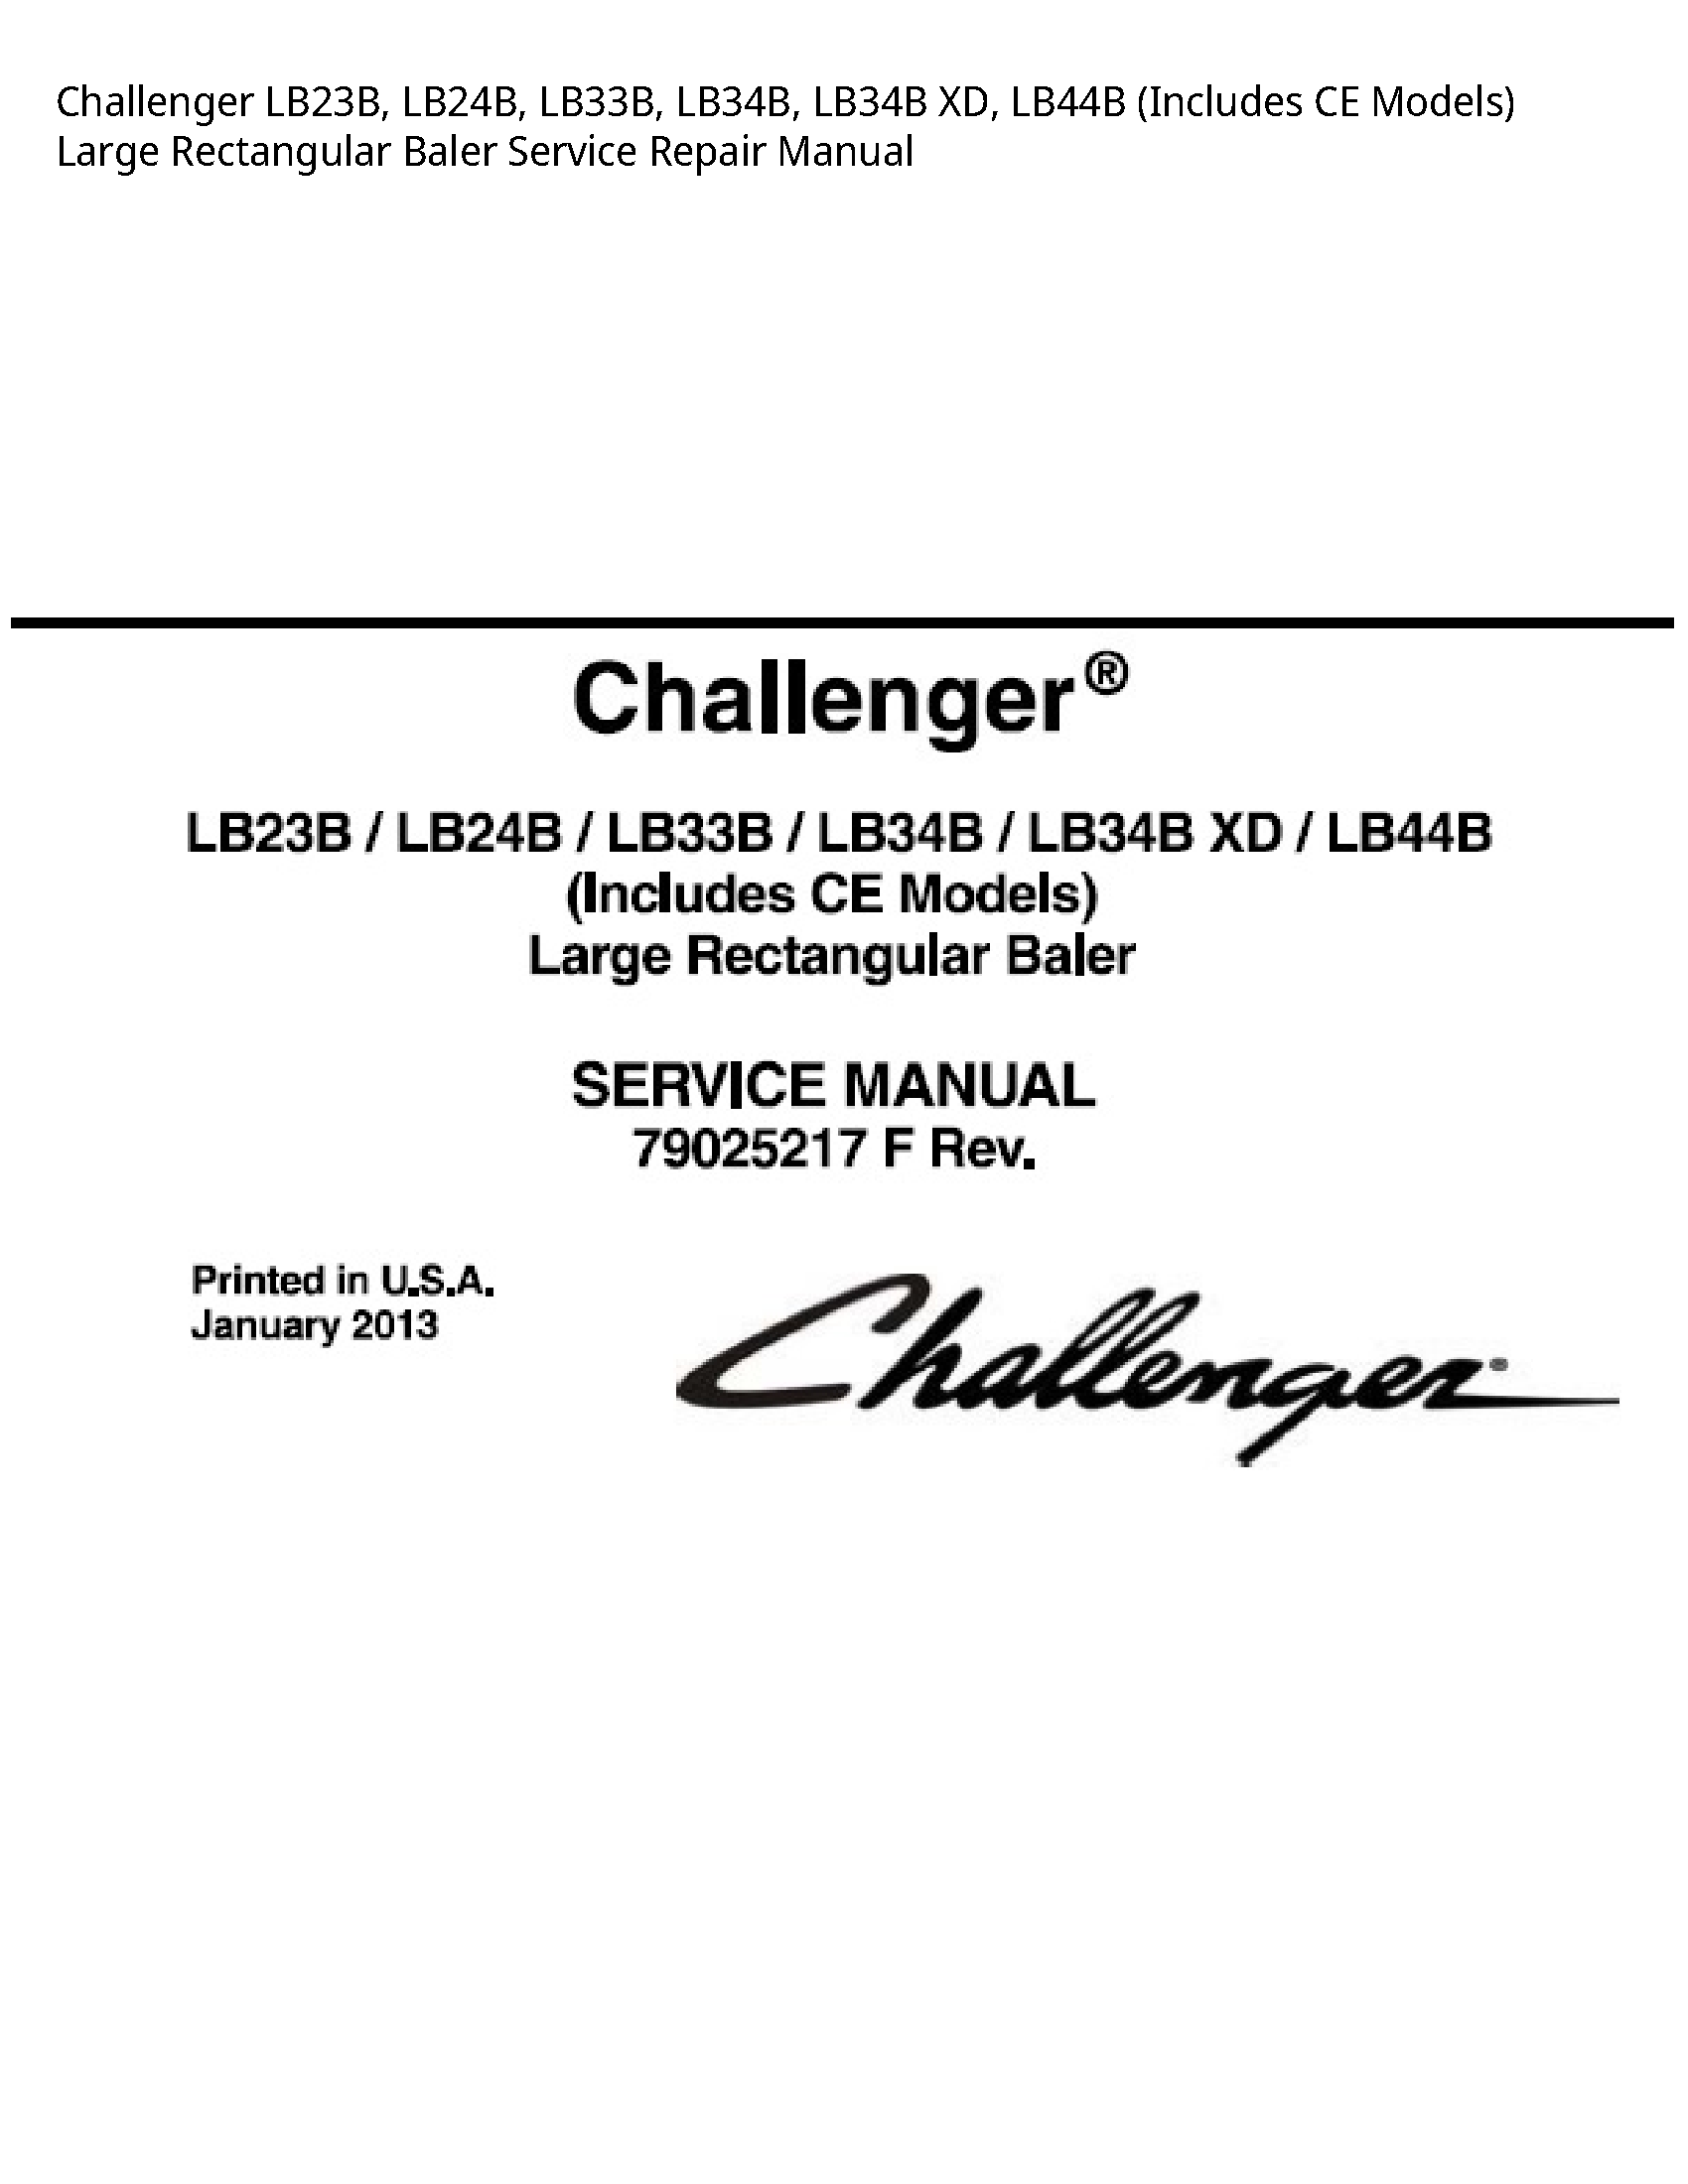 Challenger LB23B XD manual